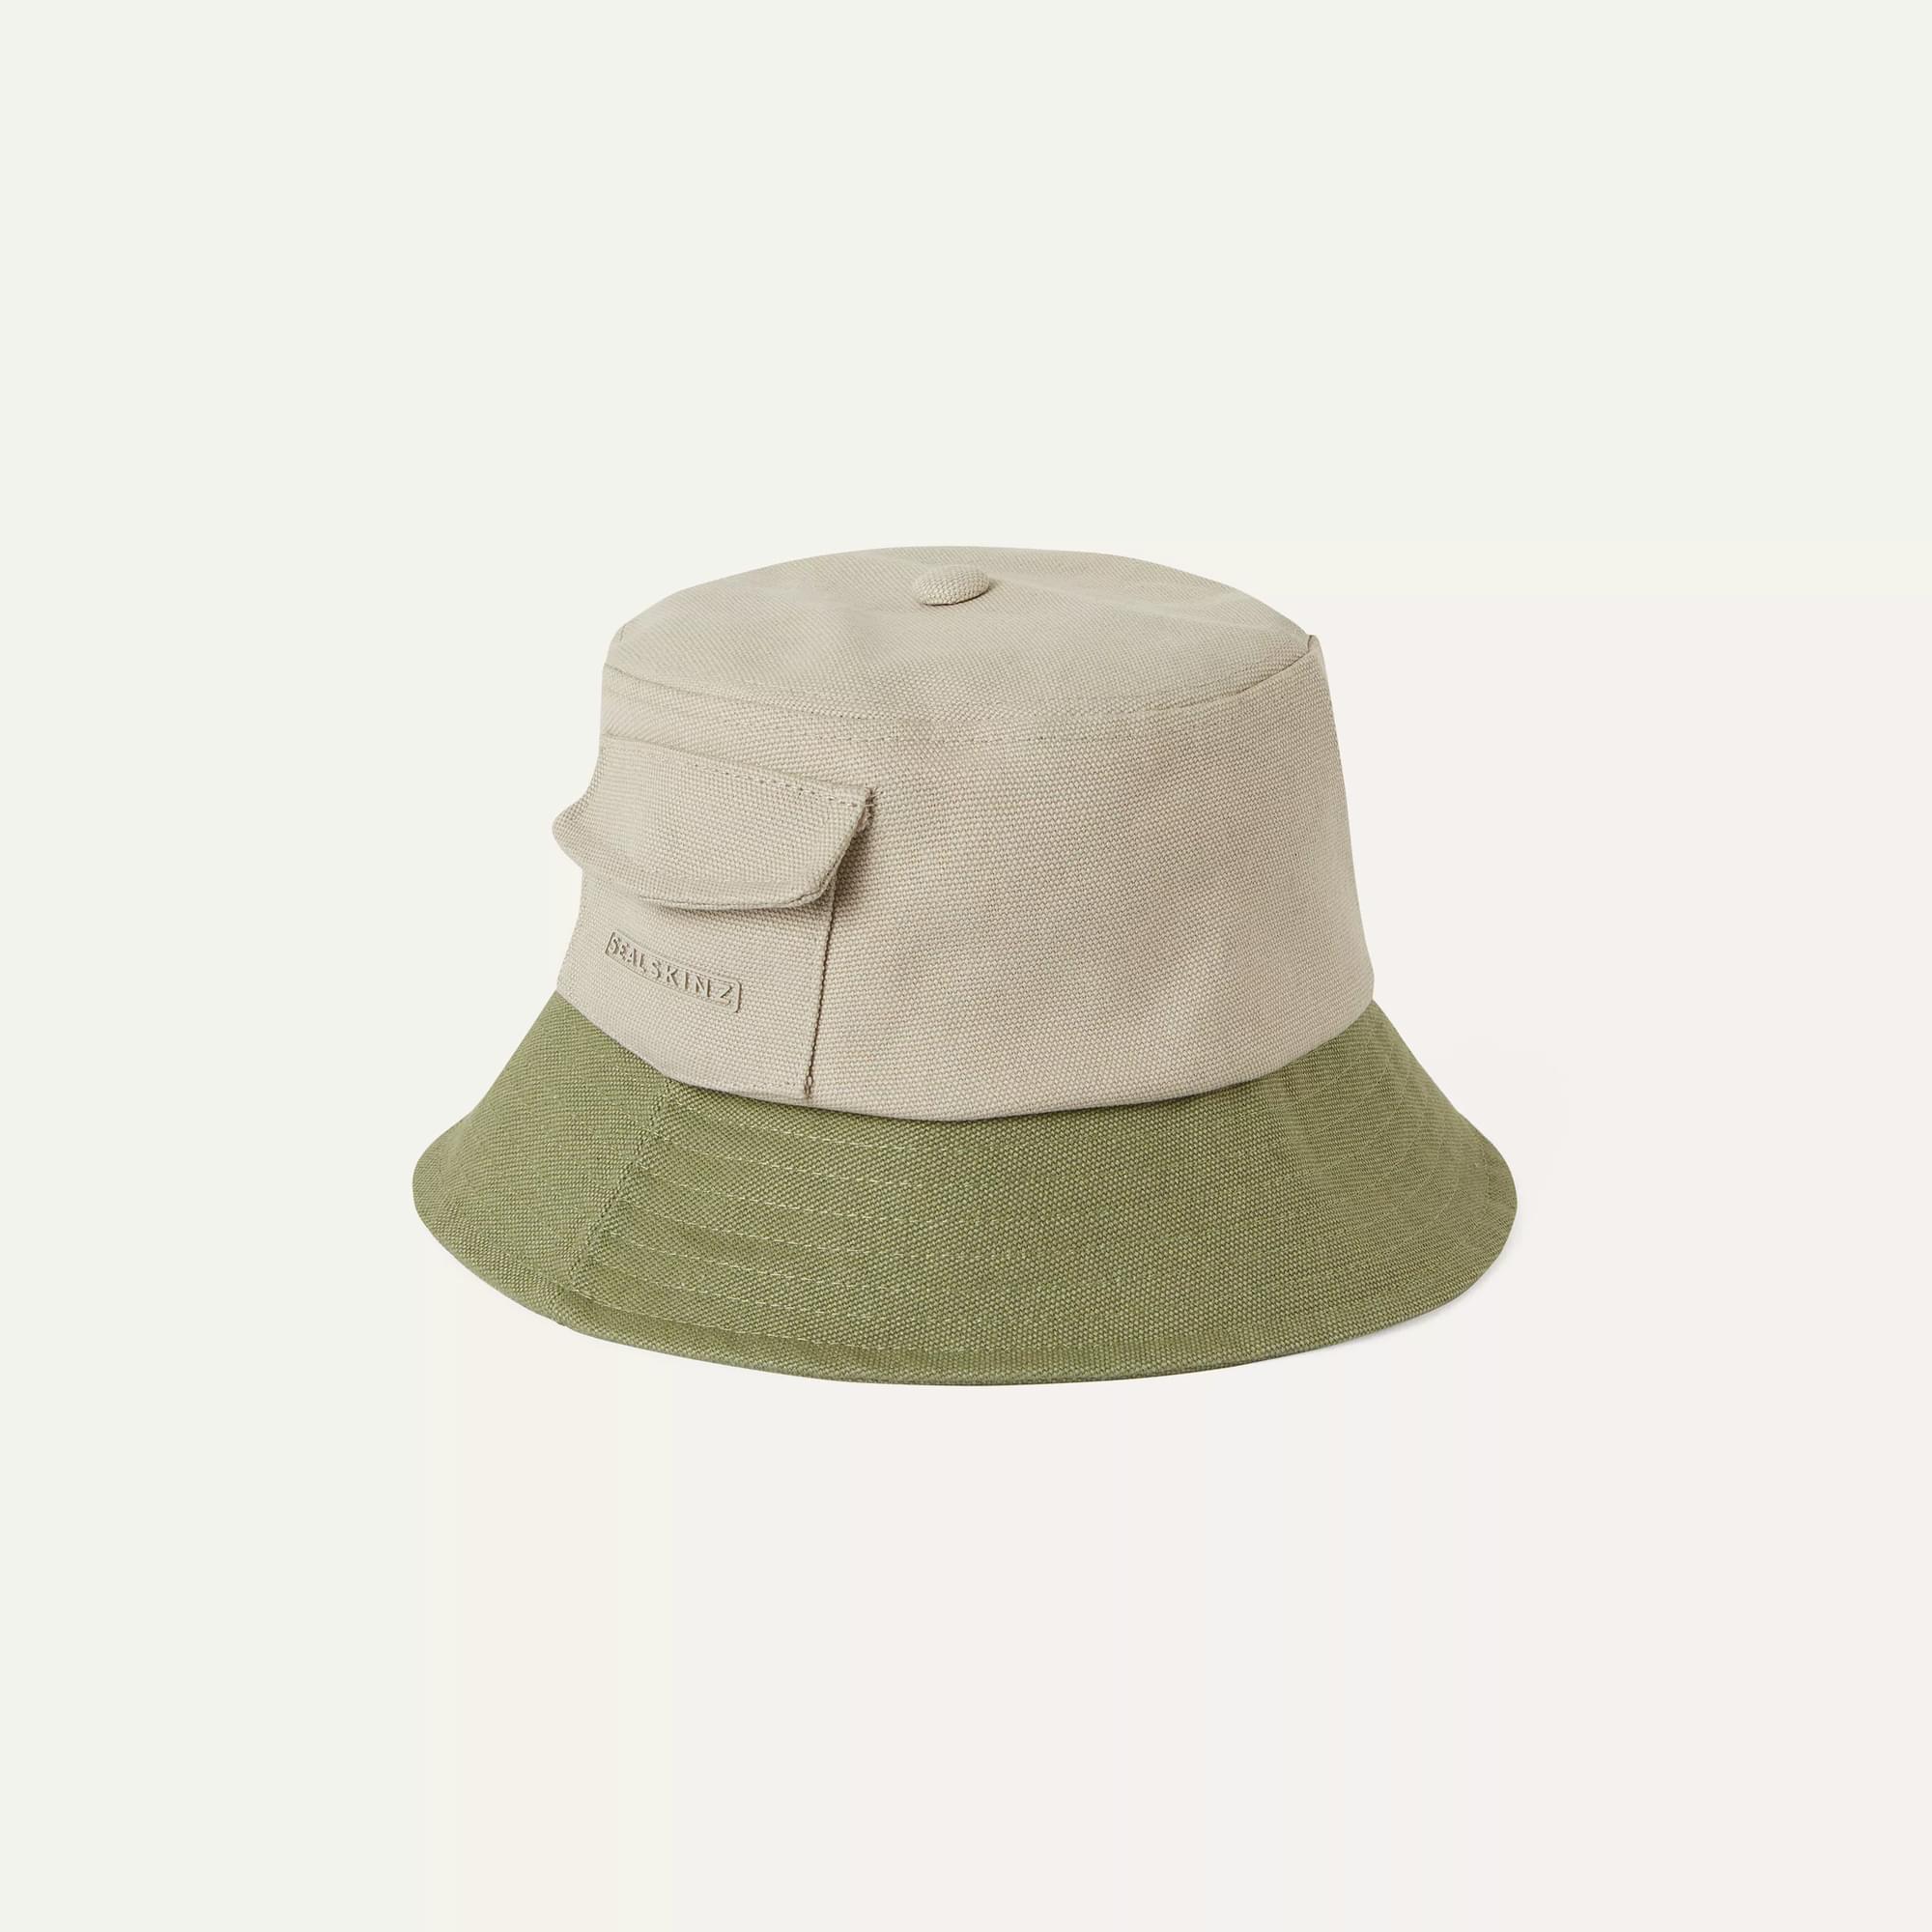 Under Armour unisex Insulated Adjustable Bucket Hat - Green, S/M